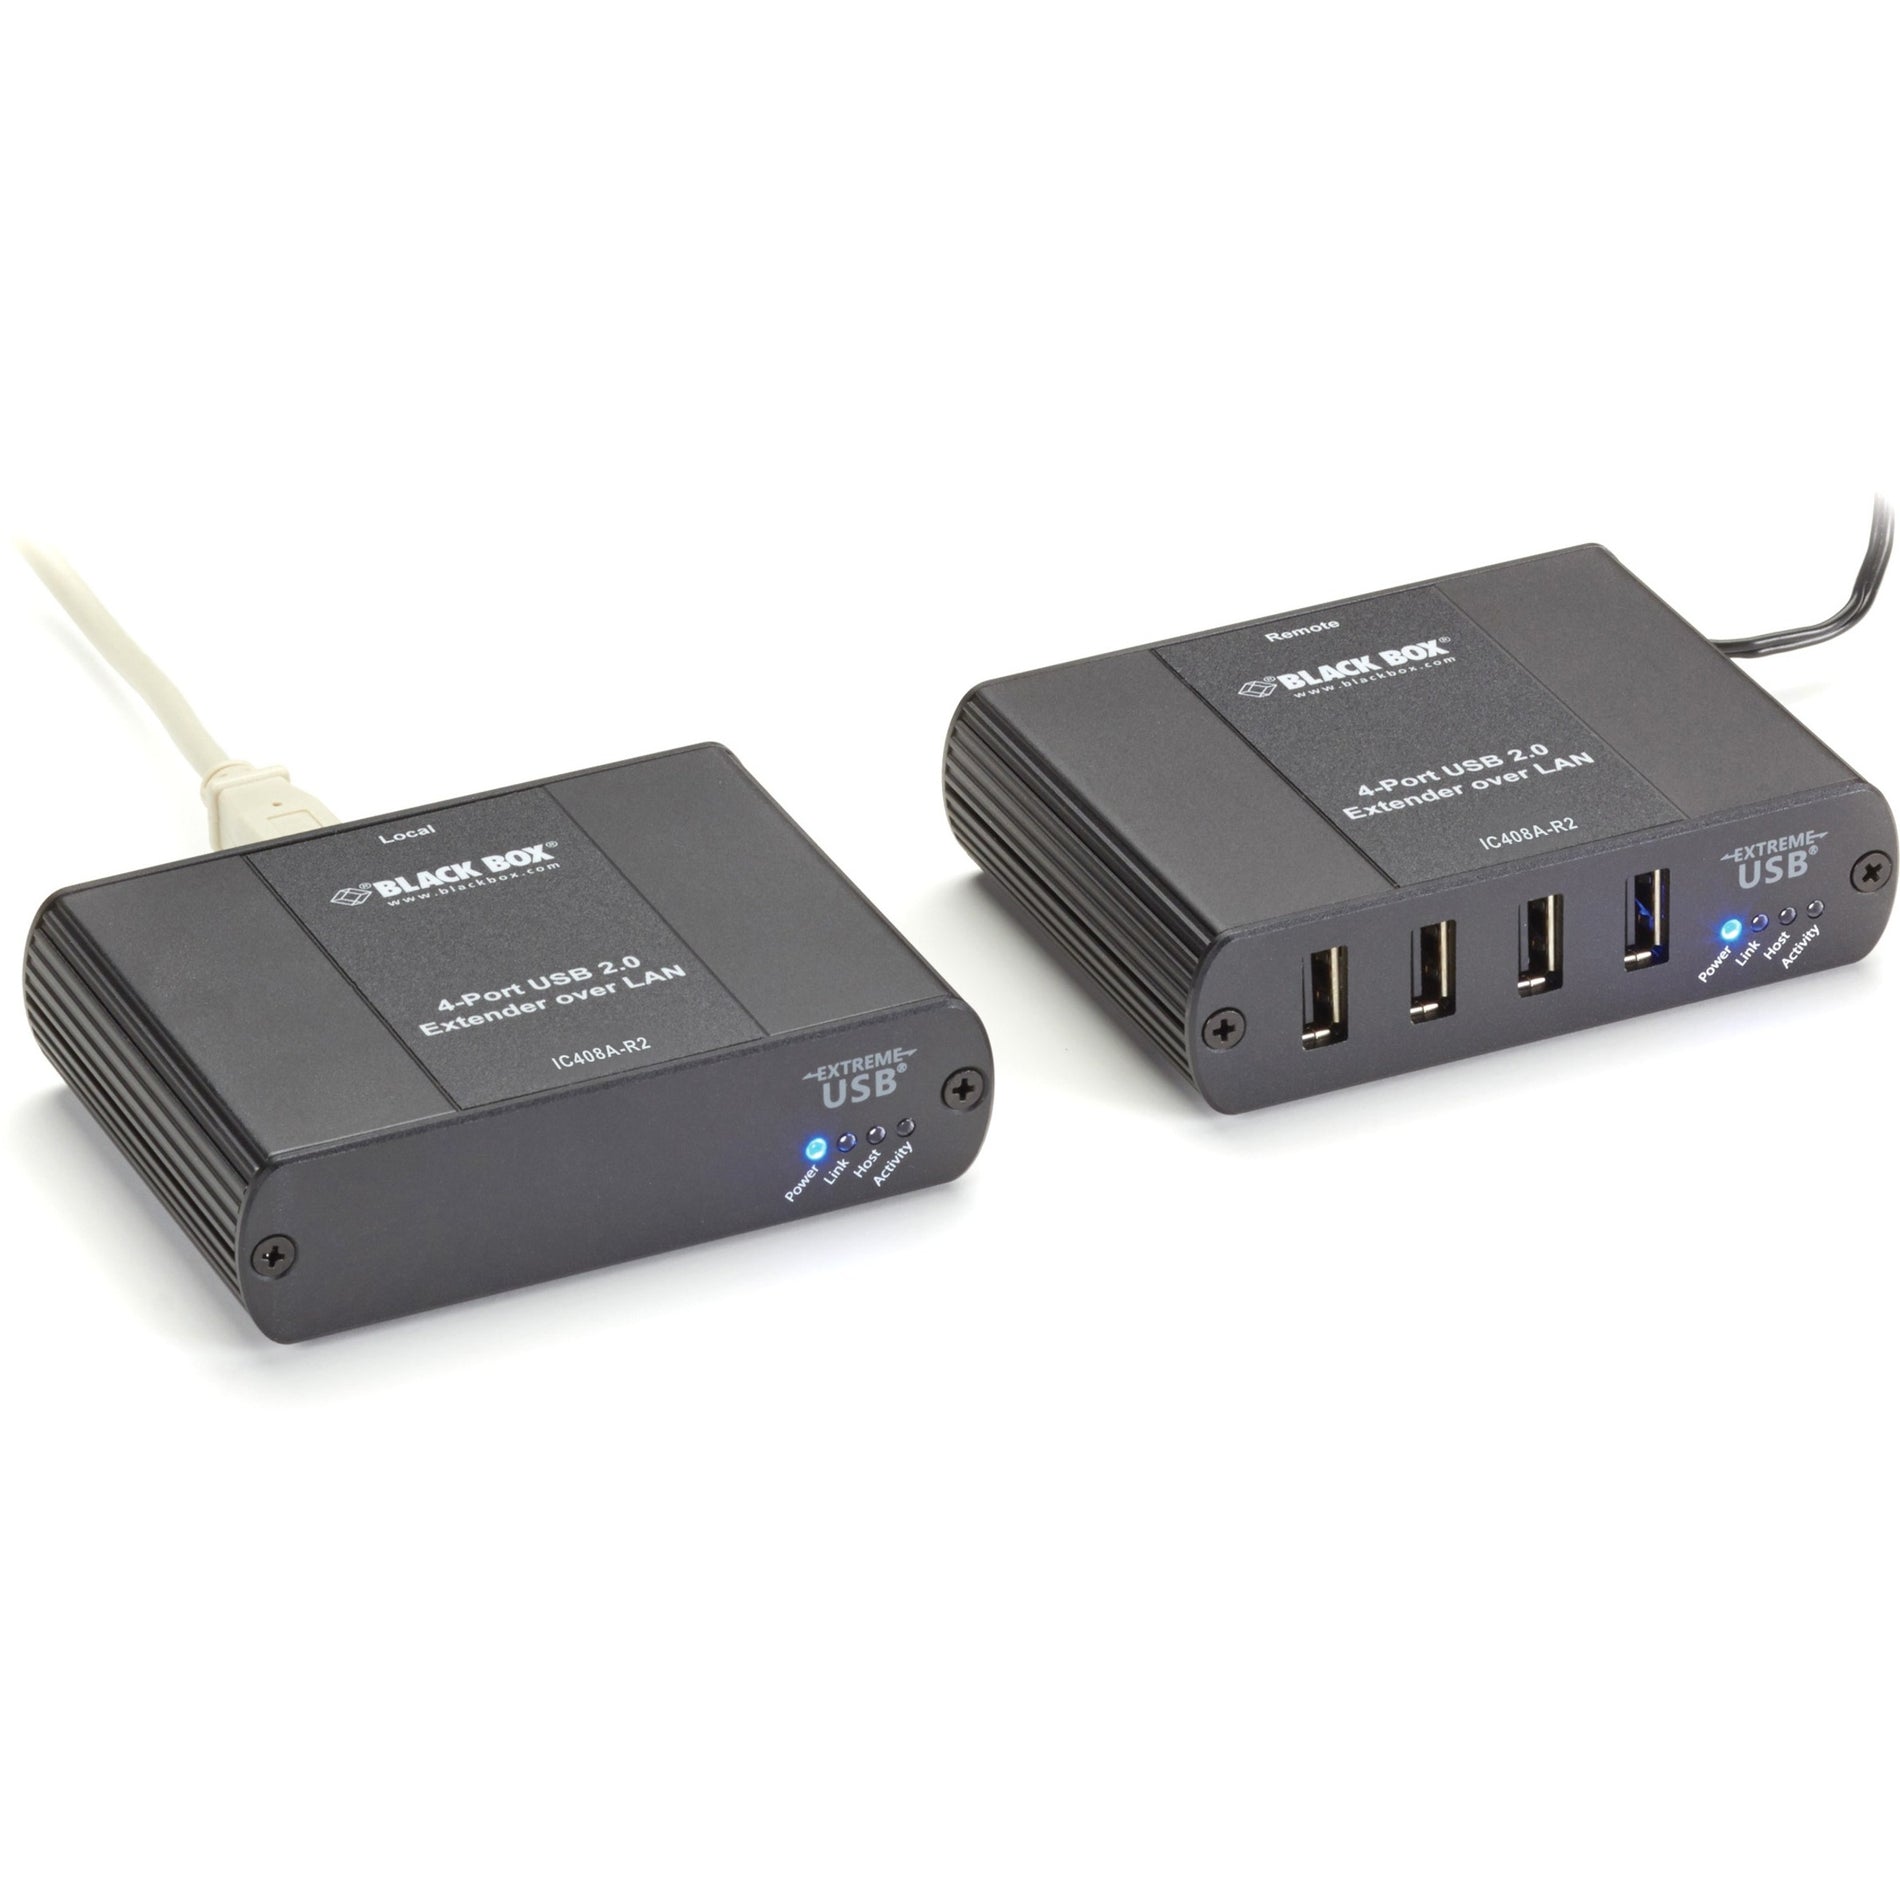 Black Box IC408A-R2 USB 2.0 Extender - CATx/LAN, 4-Port, Extend USB Signals up to 328 ft